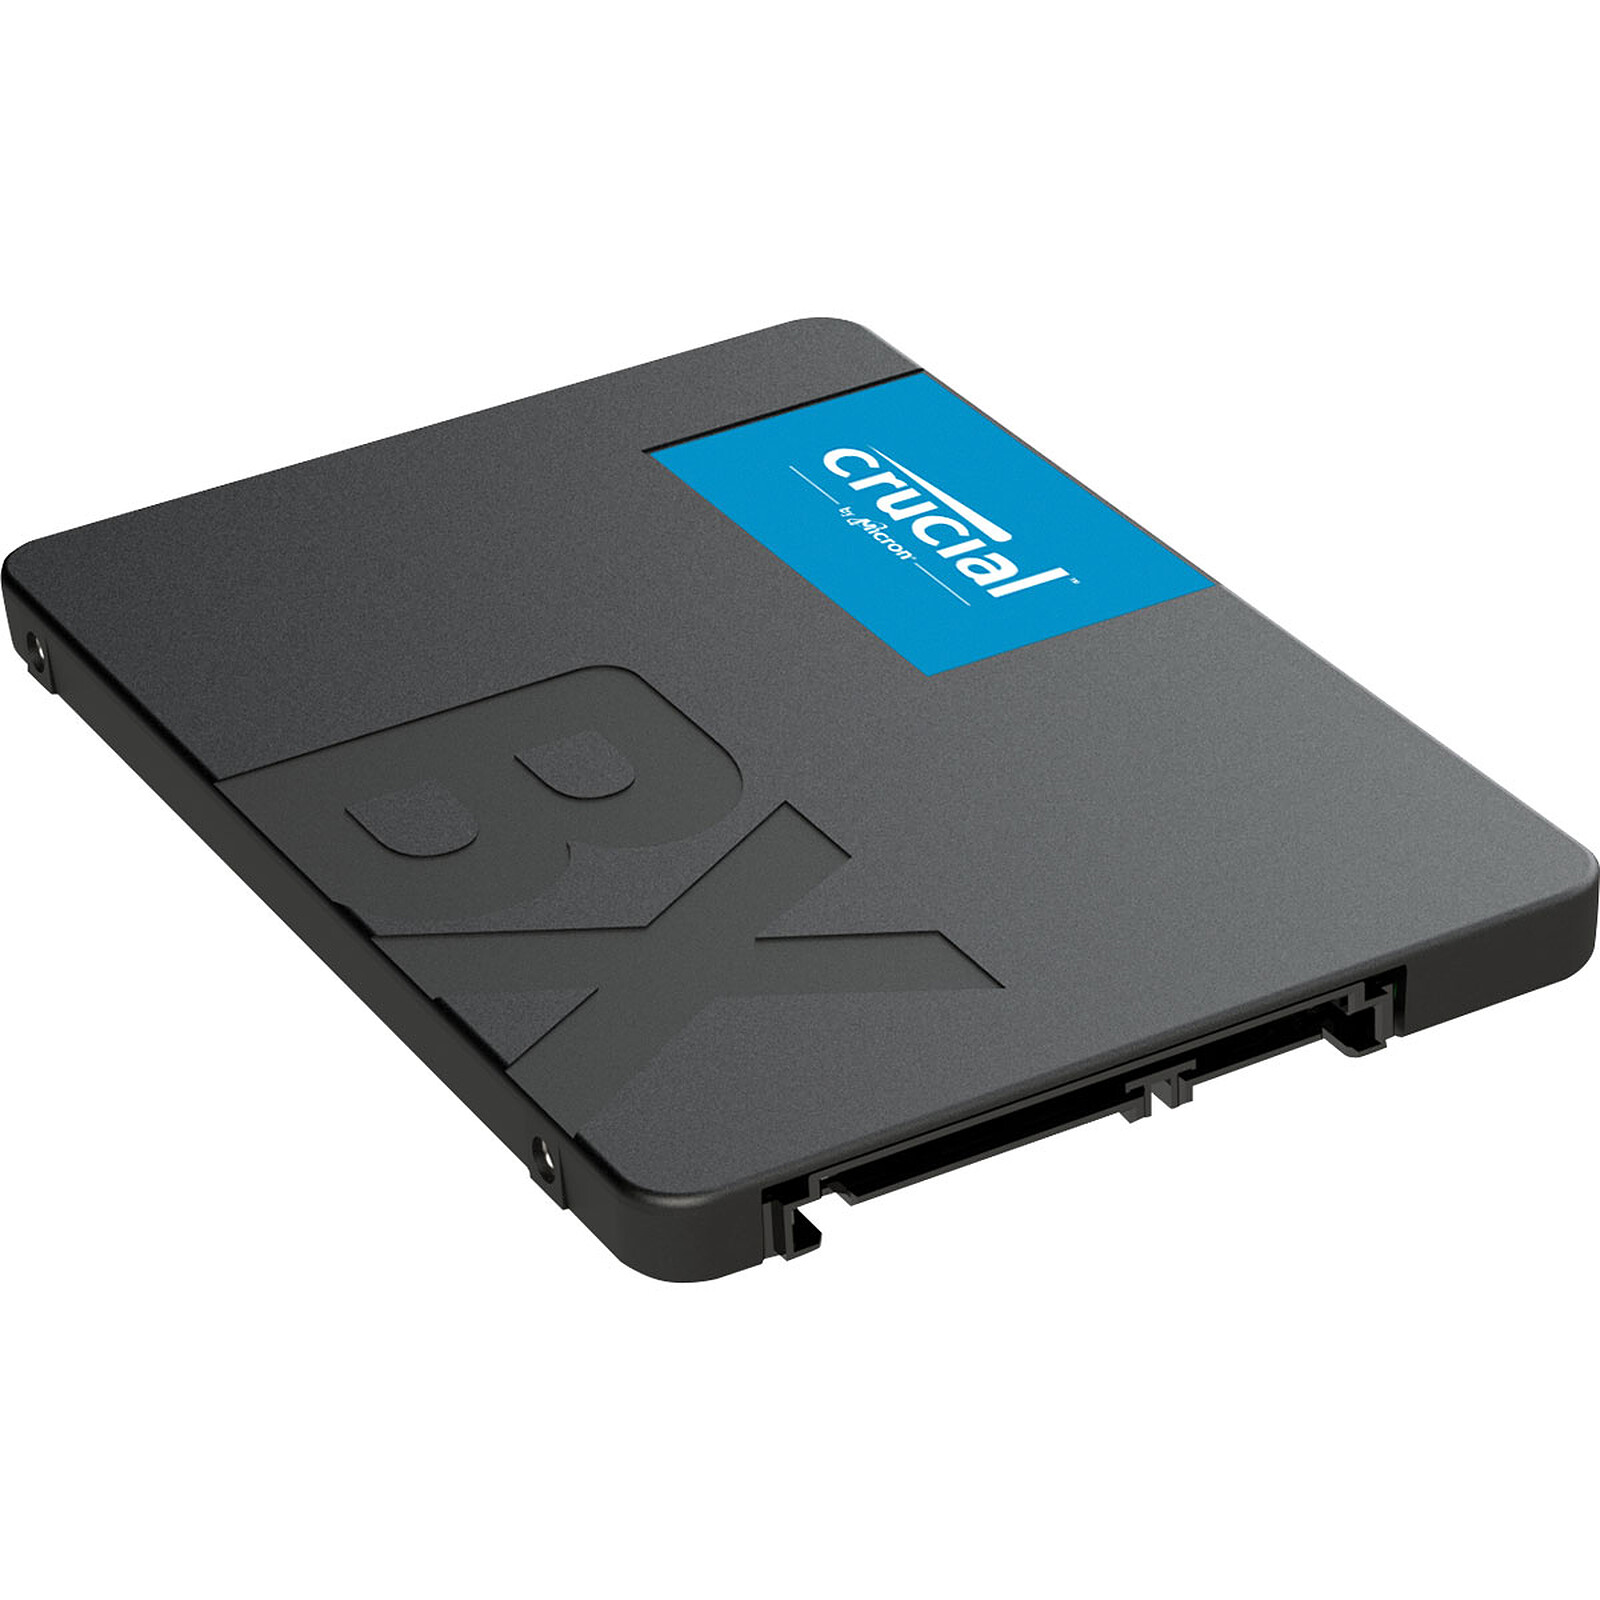 Crucial BX500 GB - Crucial on LDLC